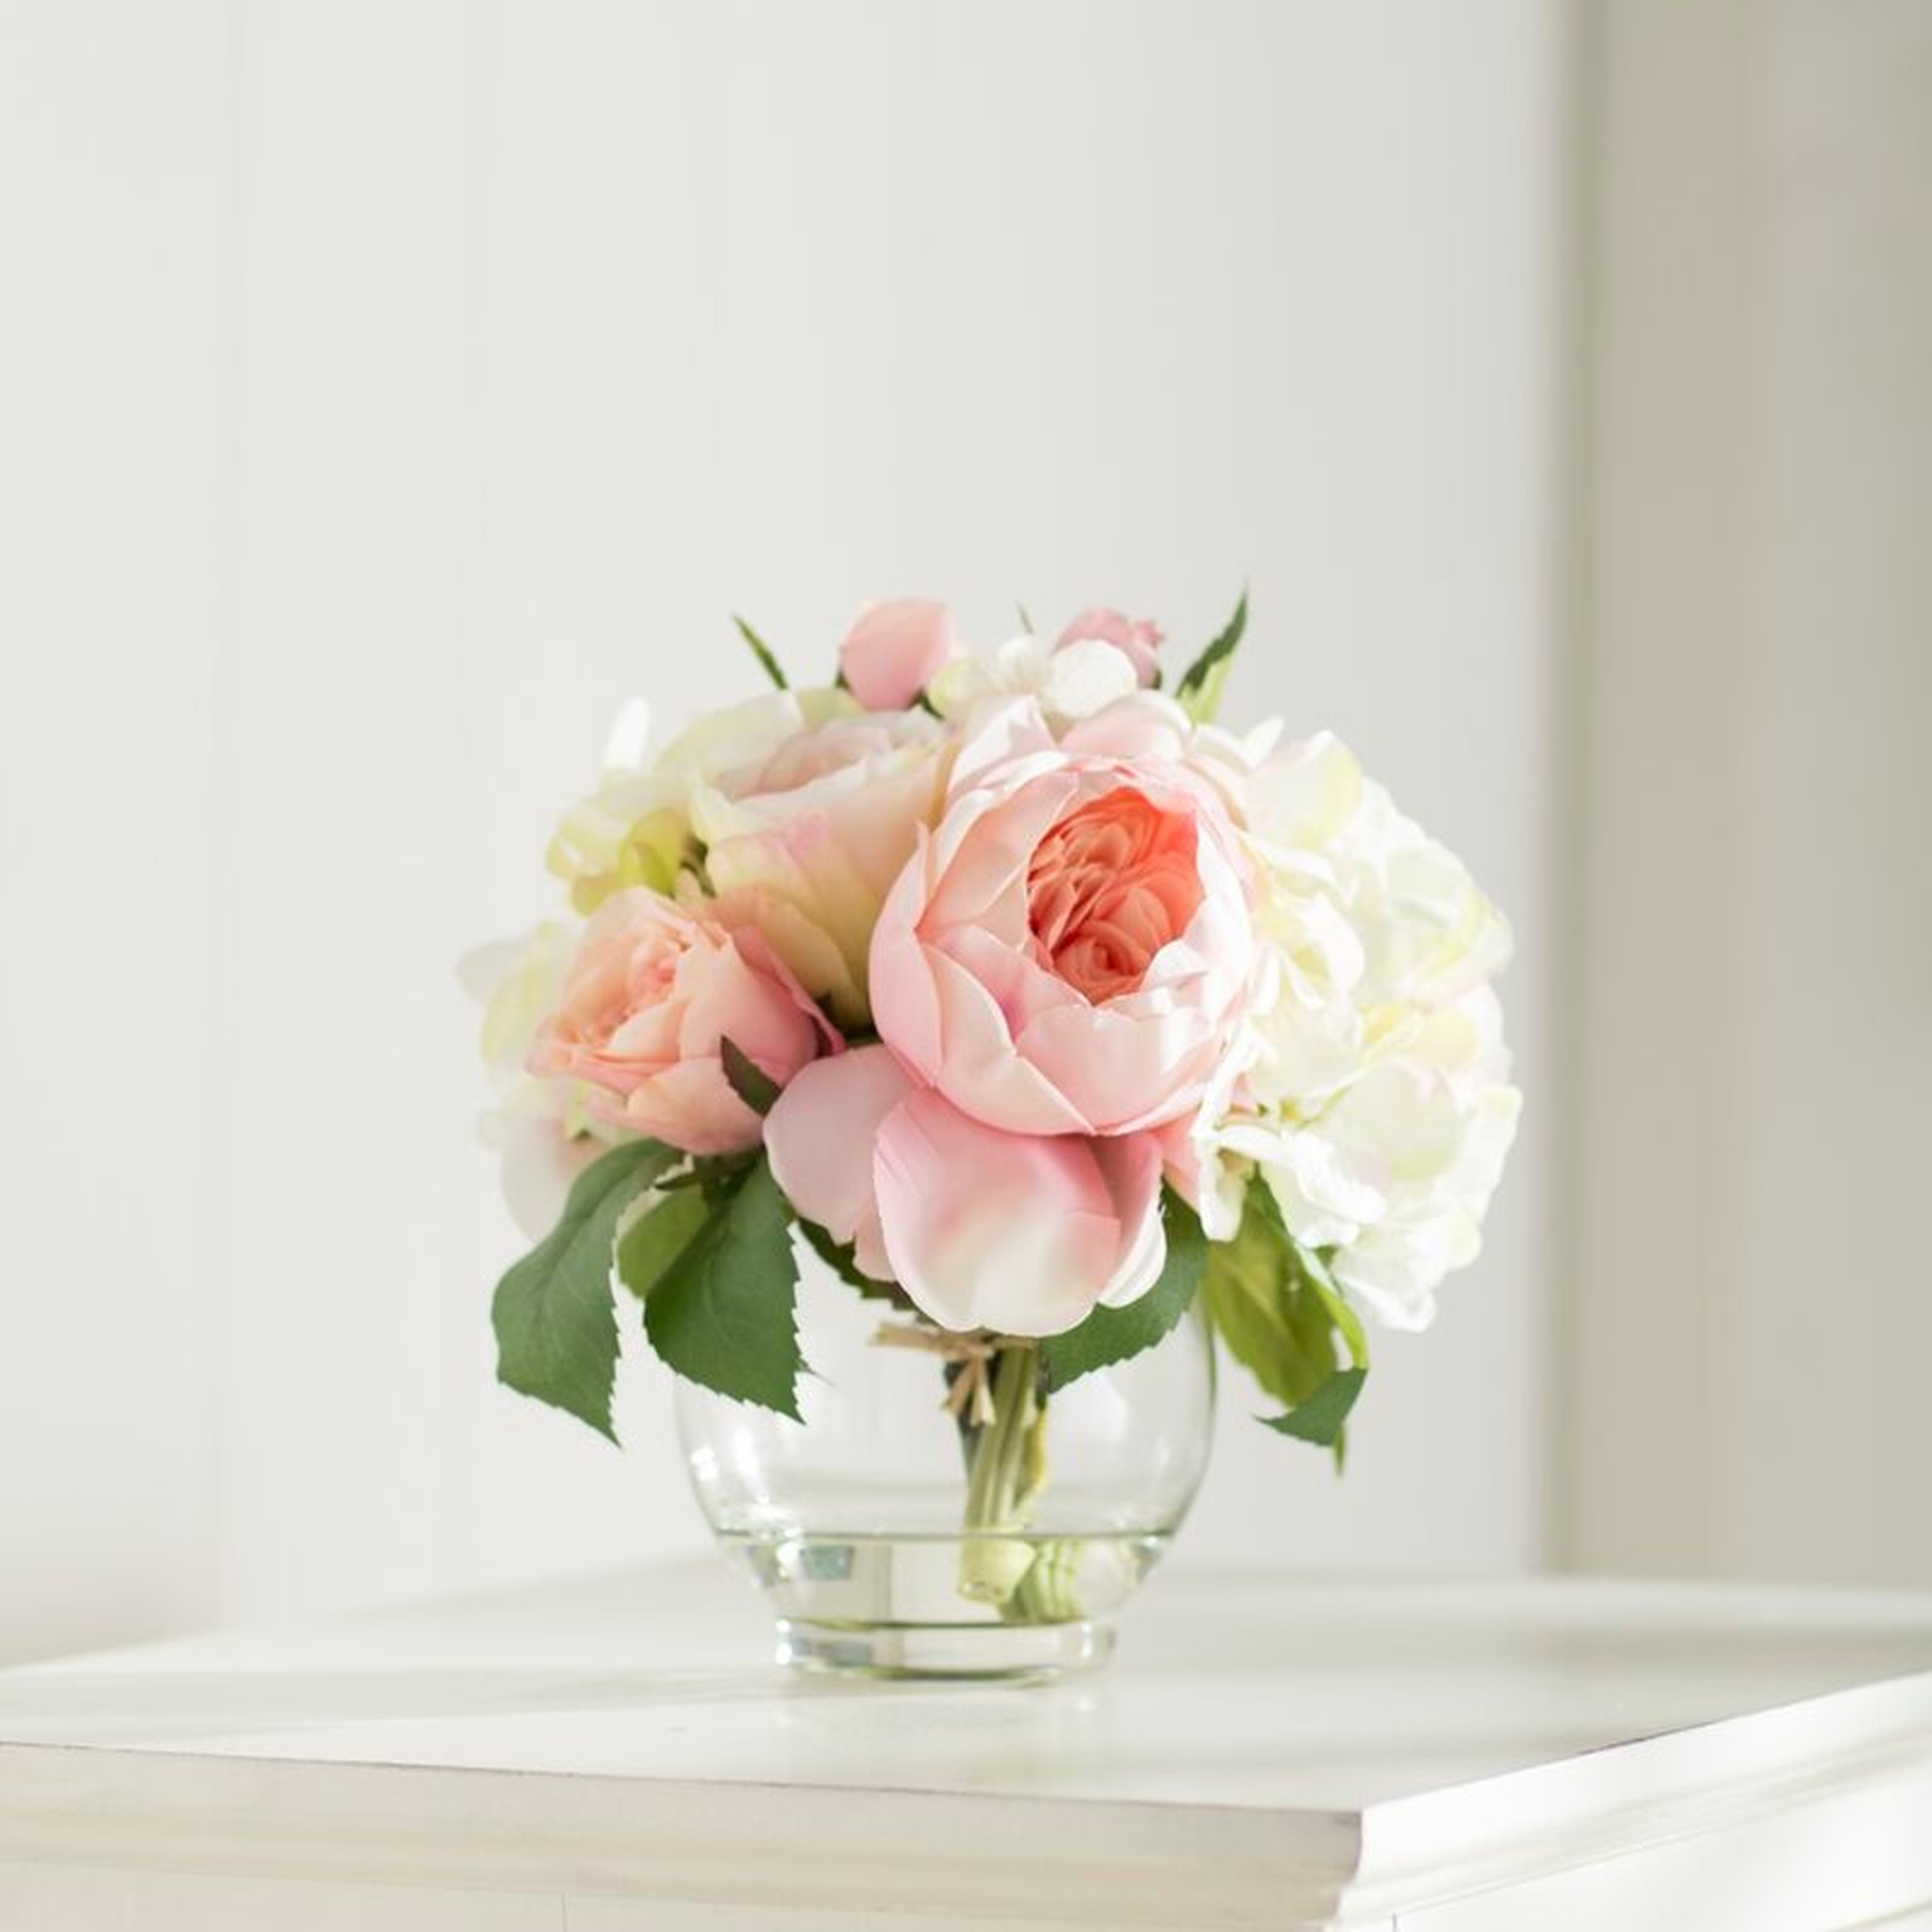 Roses and Hydrangea Floral Arrangement in Vase - Wayfair